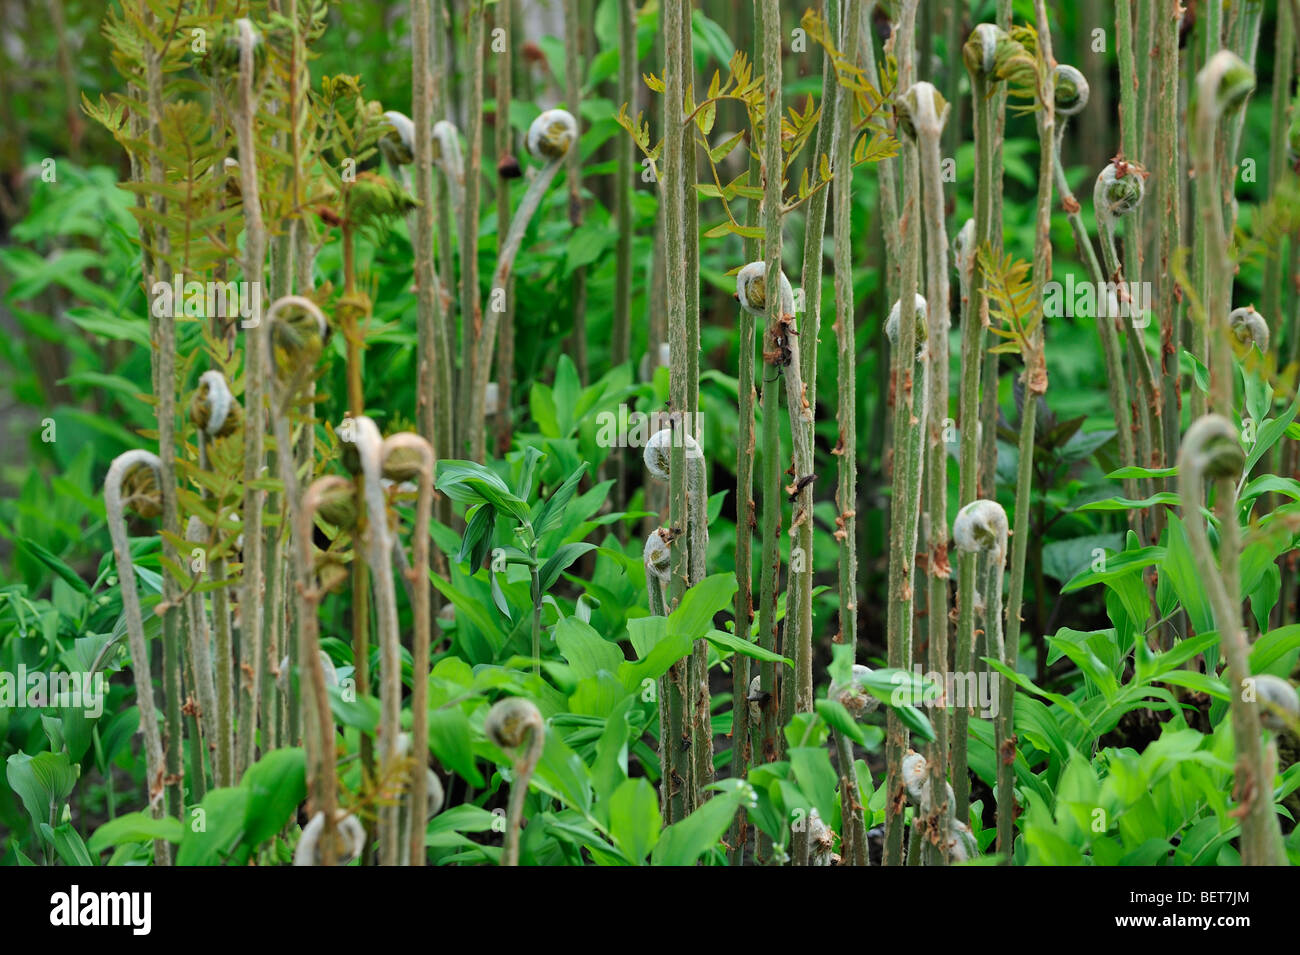 Royal fern (Osmunda regalis) fronds unfurling, Belgium Stock Photo